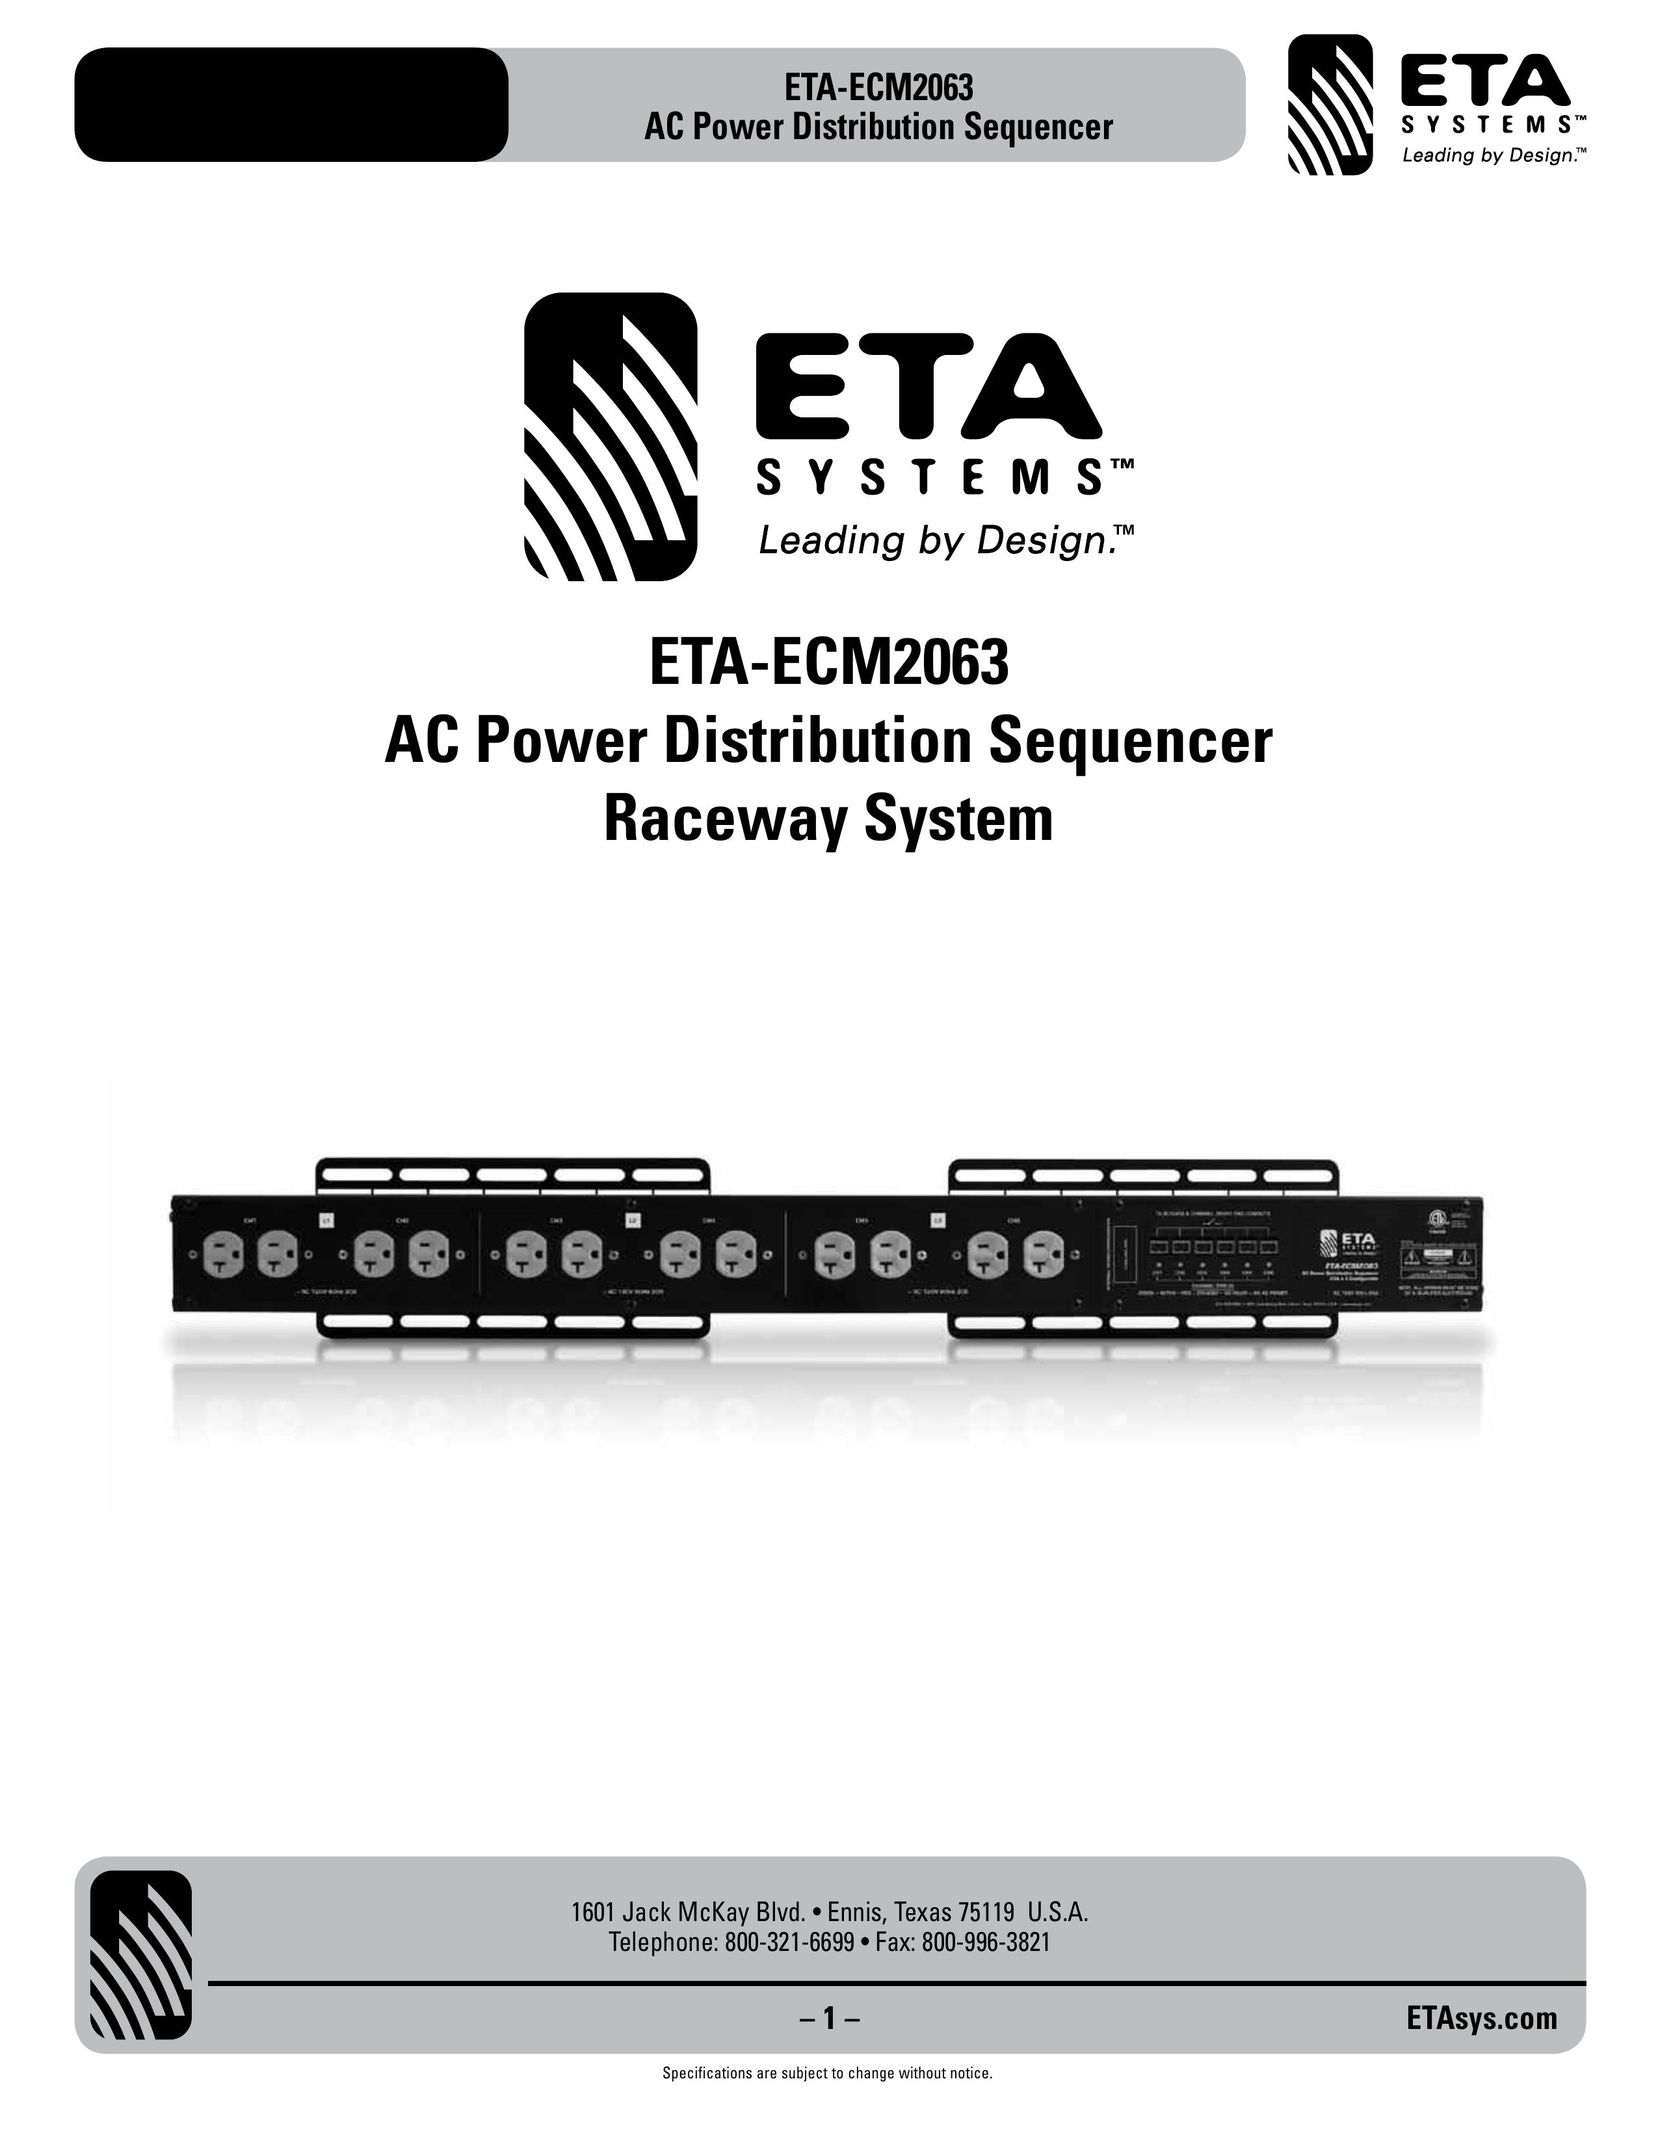 ETA Systems eta-ecm2063 Surge Protector User Manual